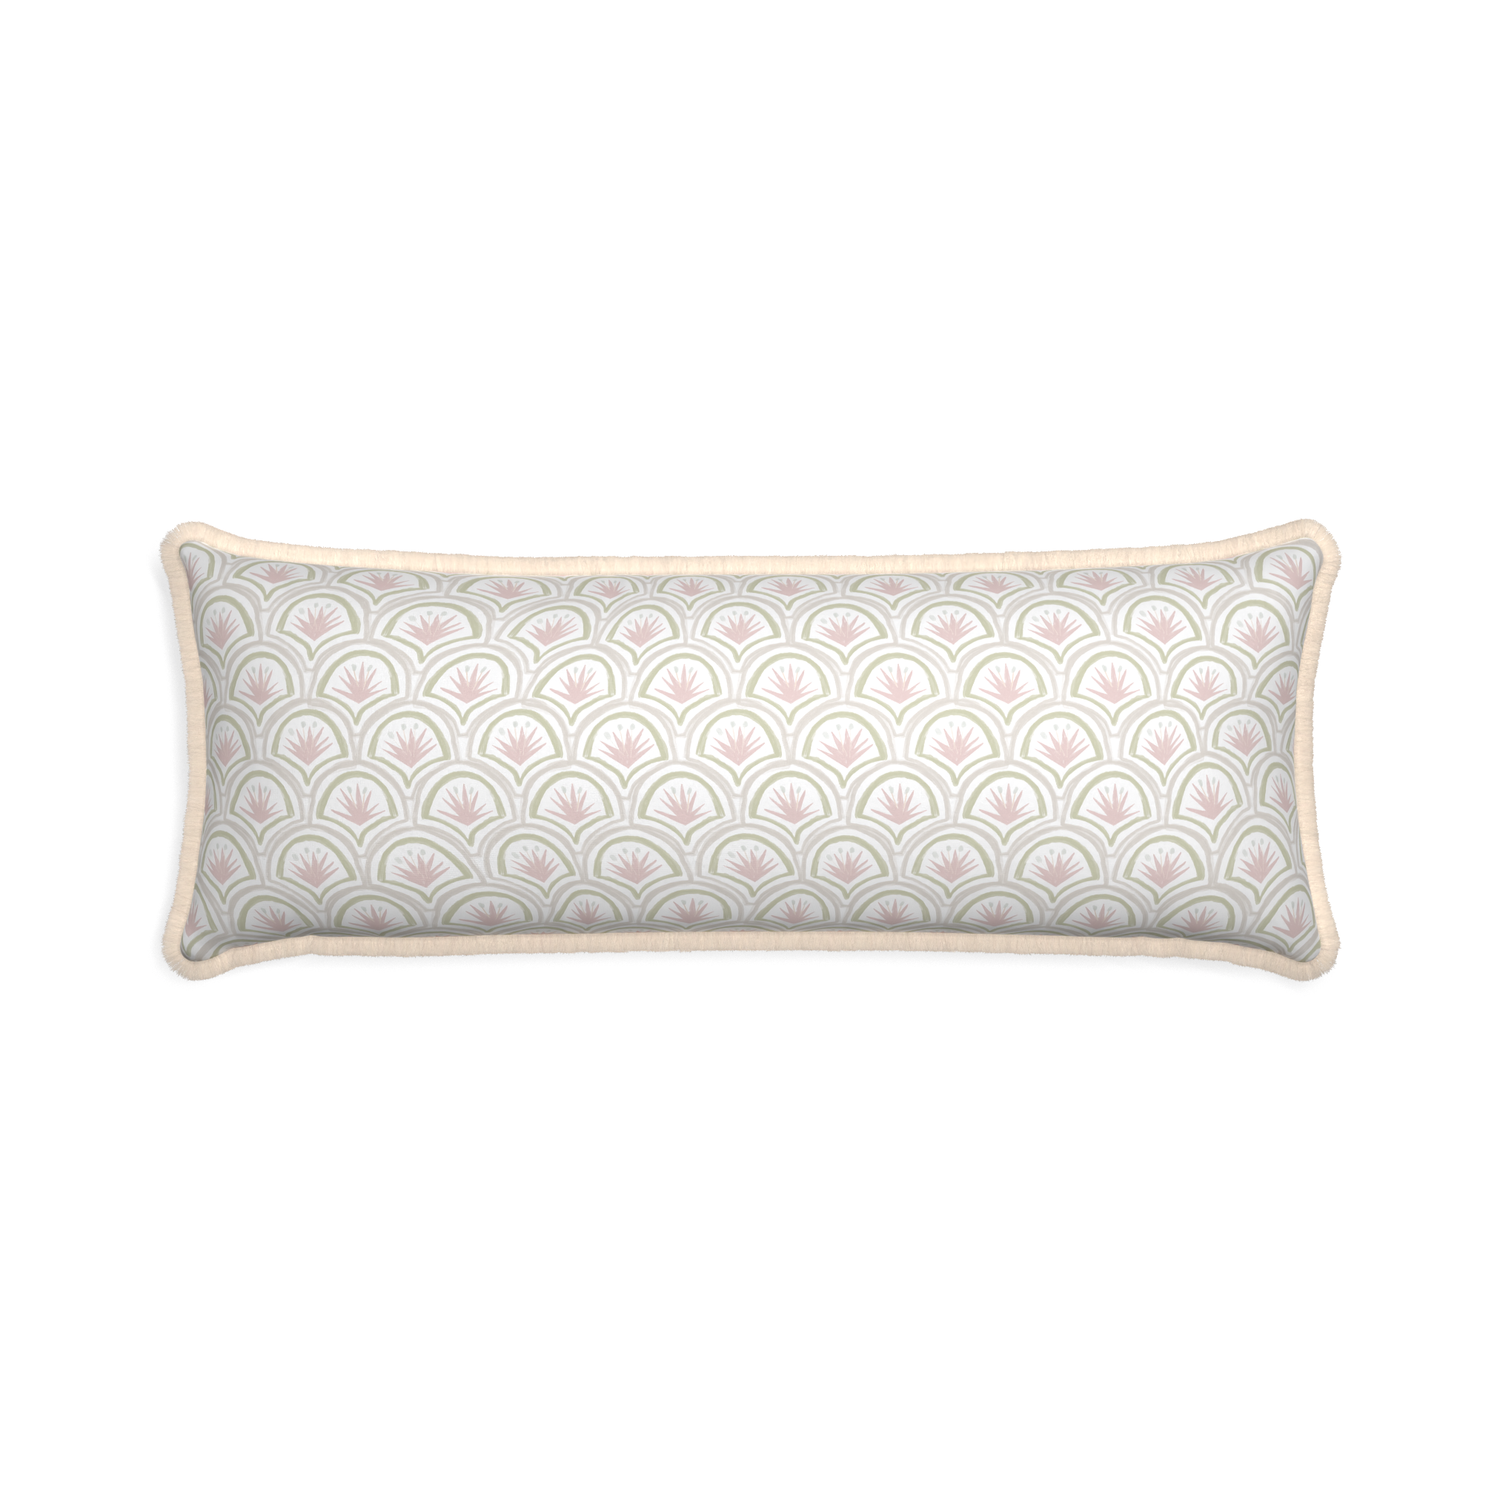 Xl-lumbar thatcher rose custom pillow with cream fringe on white background